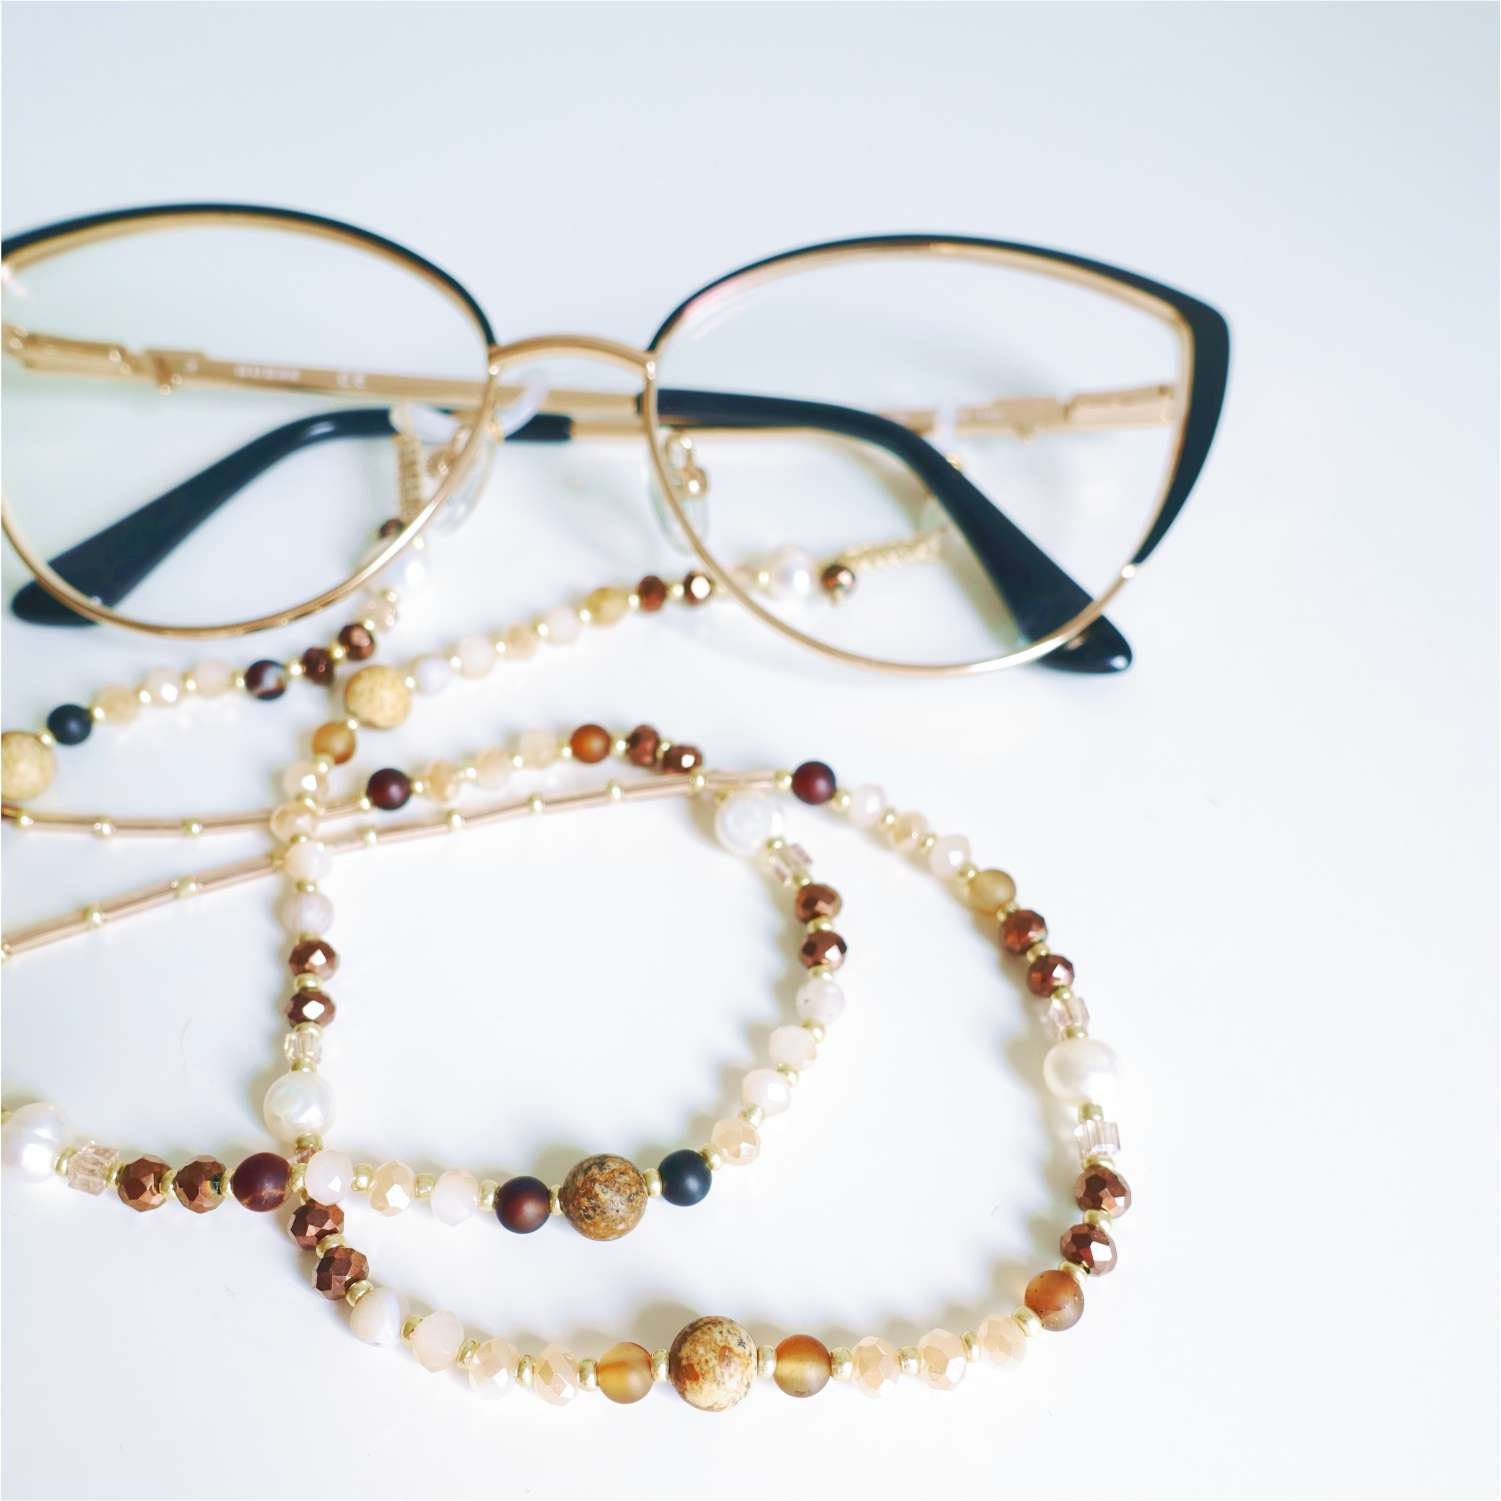 Bohemian Imitation Pearl Glasses Chain For Women Fashion Baroque